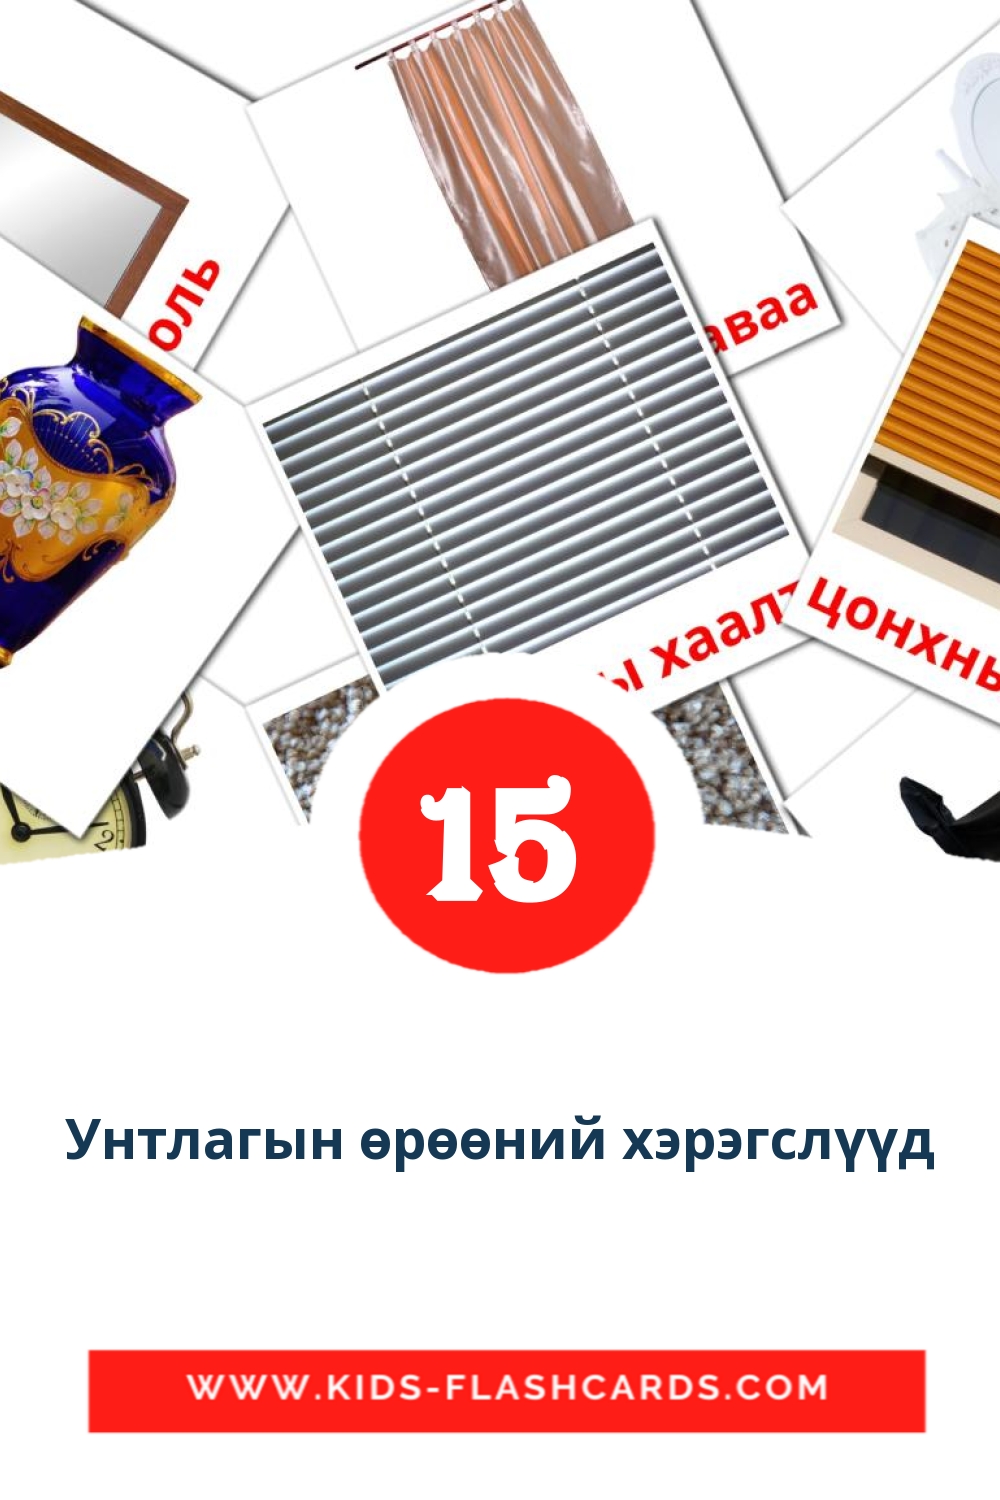 15 cartes illustrées de Унтлагын өрөөний хэрэгслүүд pour la maternelle en mongol